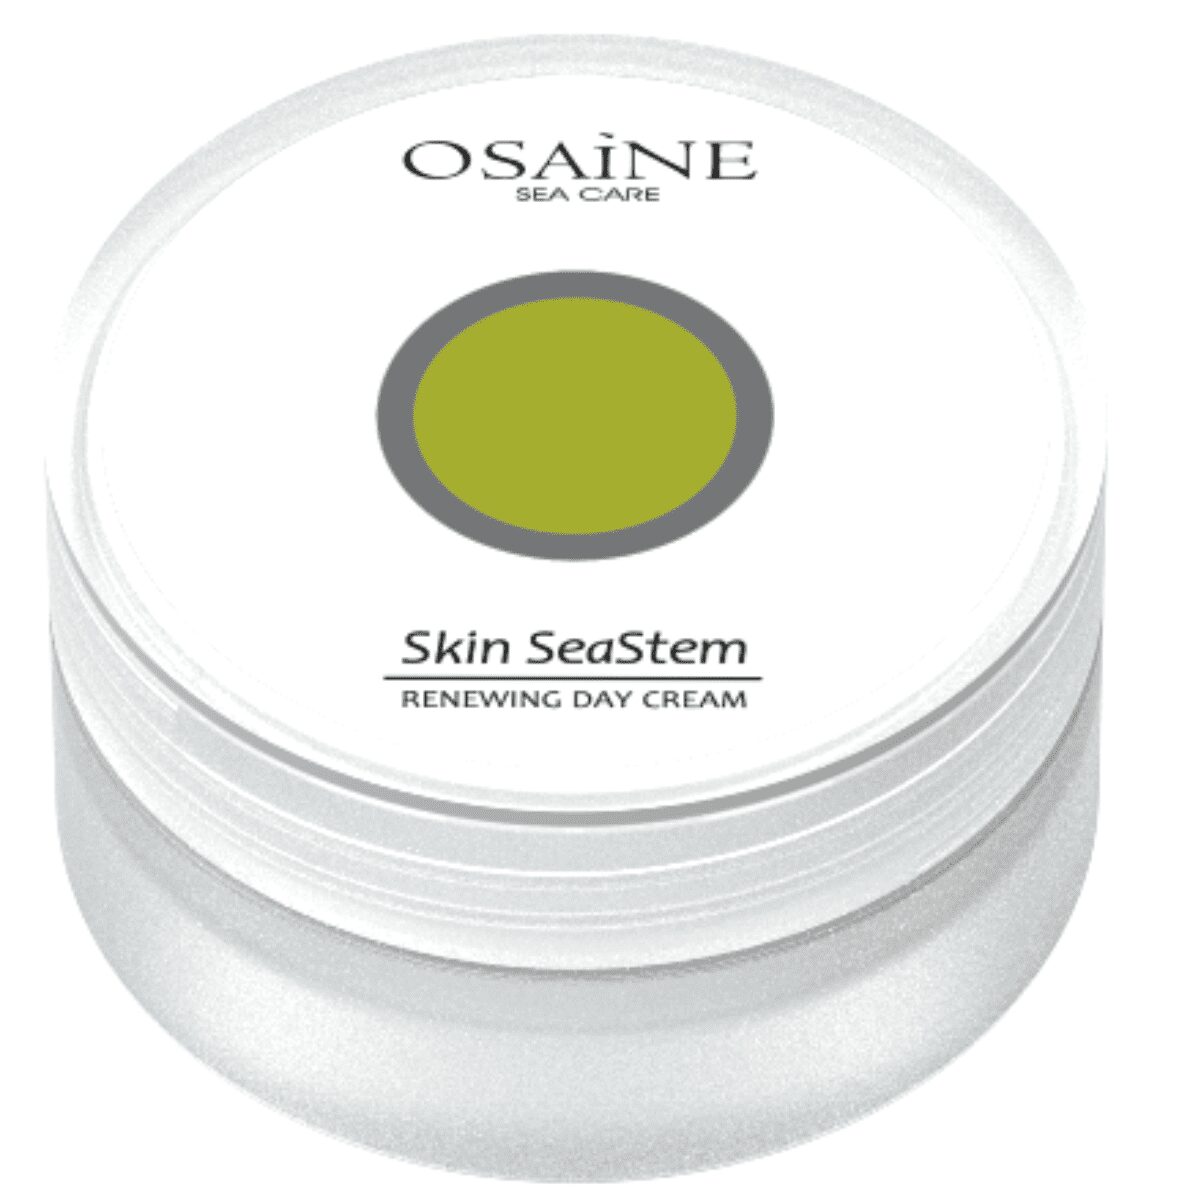 Skin Seastem Renewing Day Cream